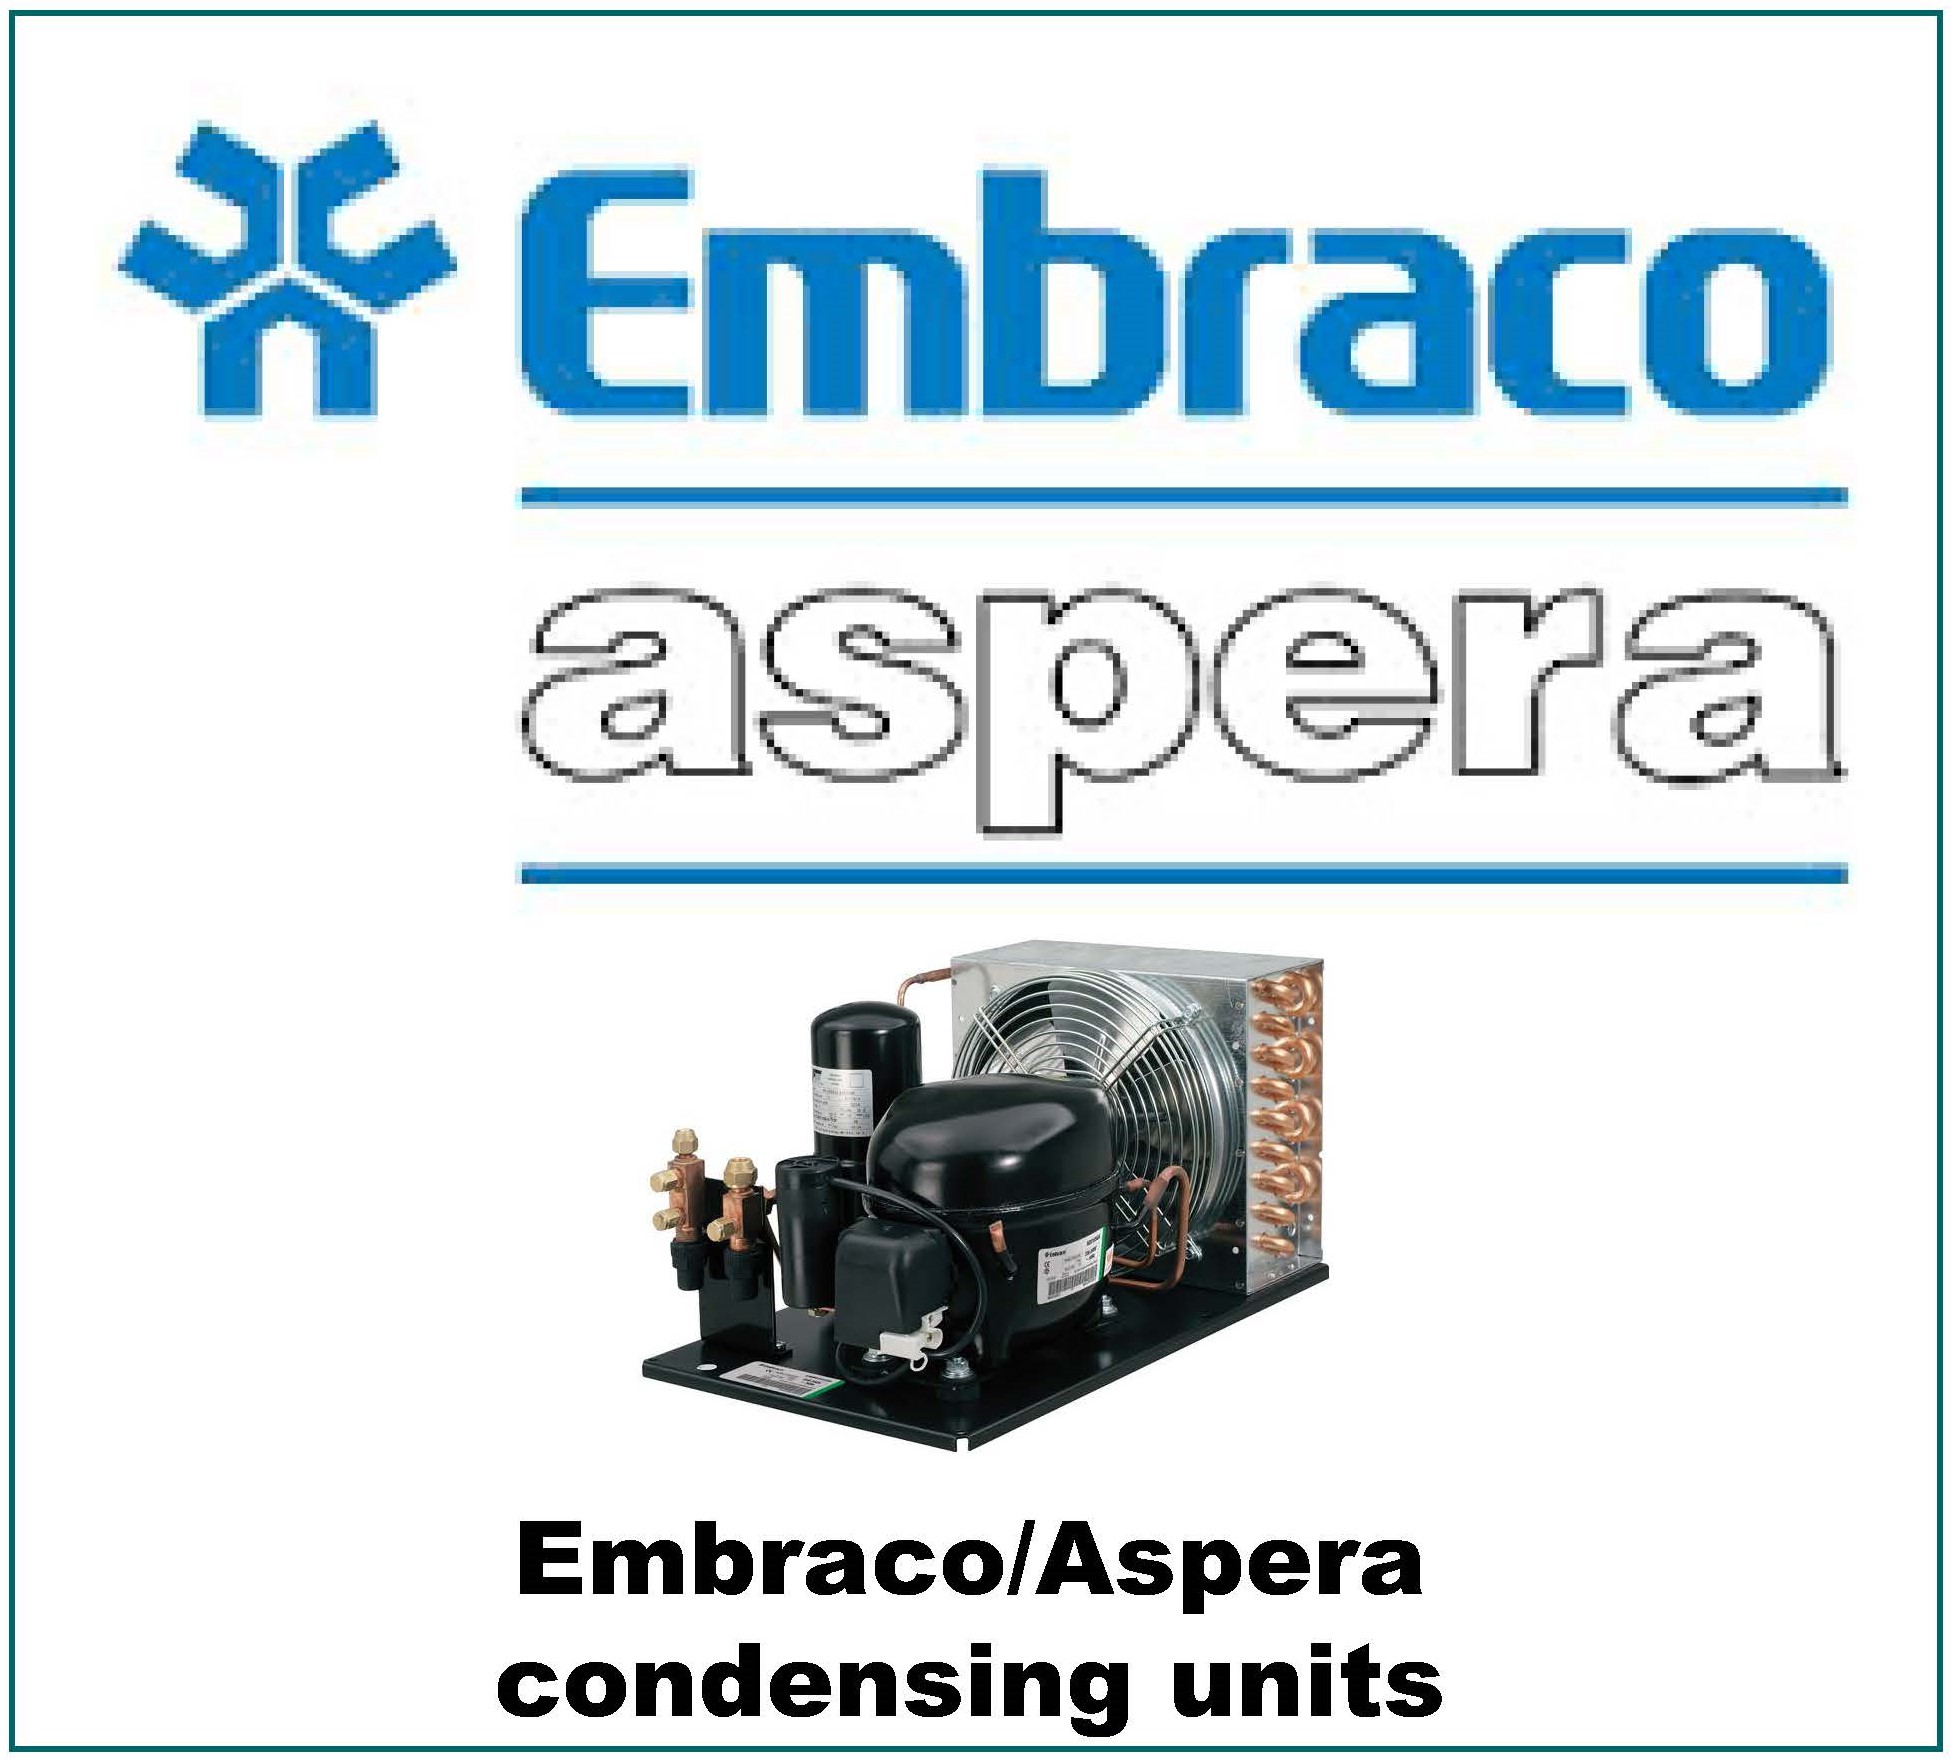 Aspera/Embraco condensing units